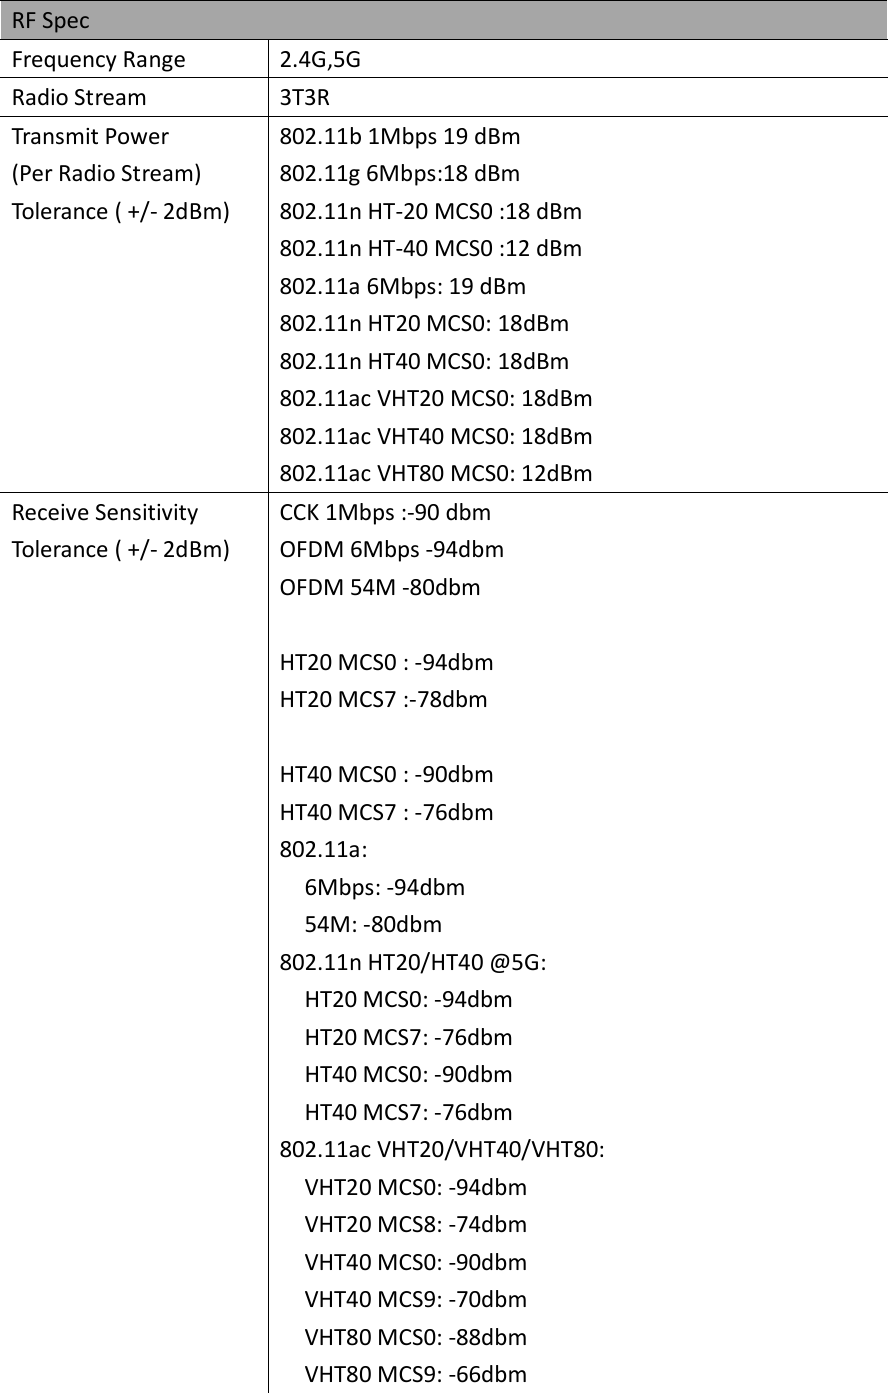 RF Spec Frequency Range  2.4G,5G Radio Stream  3T3R Transmit Power (Per Radio Stream) Tolerance ( +/- 2dBm) 802.11b 1Mbps 19 dBm   802.11g 6Mbps:18 dBm 802.11n HT-20 MCS0 :18 dBm 802.11n HT-40 MCS0 :12 dBm 802.11a 6Mbps: 19 dBm 802.11n HT20 MCS0: 18dBm 802.11n HT40 MCS0: 18dBm 802.11ac VHT20 MCS0: 18dBm 802.11ac VHT40 MCS0: 18dBm 802.11ac VHT80 MCS0: 12dBm Receive Sensitivity Tolerance ( +/- 2dBm) CCK 1Mbps :-90 dbm OFDM 6Mbps -94dbm OFDM 54M -80dbm  HT20 MCS0 : -94dbm HT20 MCS7 :-78dbm  HT40 MCS0 : -90dbm HT40 MCS7 : -76dbm 802.11a: 6Mbps: -94dbm 54M: -80dbm 802.11n HT20/HT40 @5G: HT20 MCS0: -94dbm HT20 MCS7: -76dbm HT40 MCS0: -90dbm HT40 MCS7: -76dbm 802.11ac VHT20/VHT40/VHT80: VHT20 MCS0: -94dbm VHT20 MCS8: -74dbm VHT40 MCS0: -90dbm VHT40 MCS9: -70dbm VHT80 MCS0: -88dbm VHT80 MCS9: -66dbm  